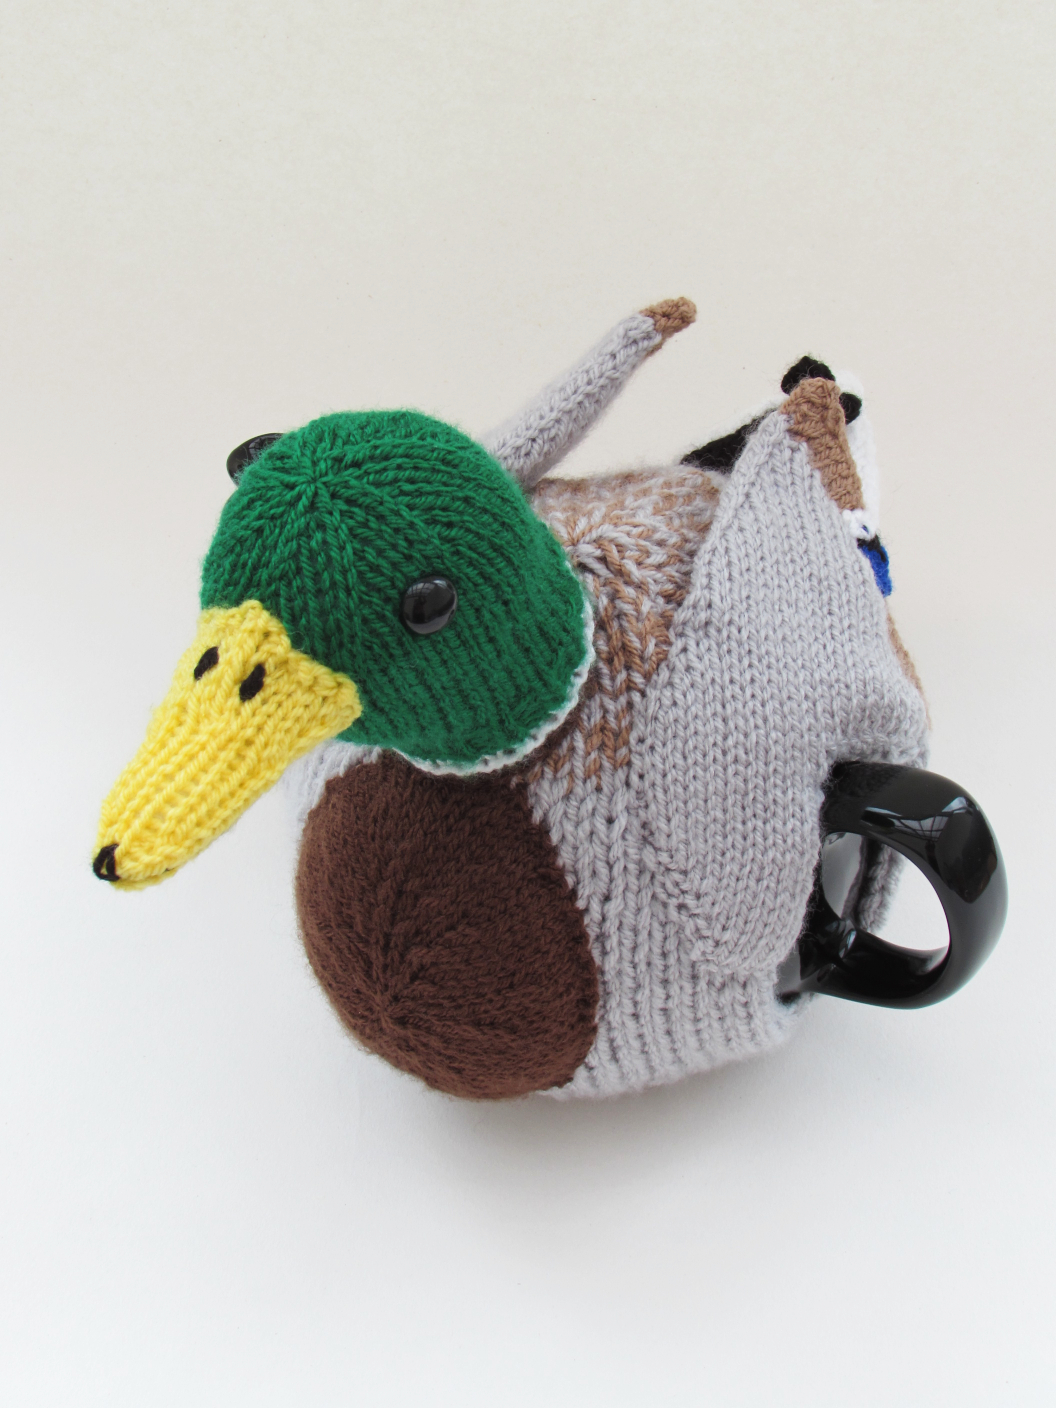 Mallard Duck knitting pattern